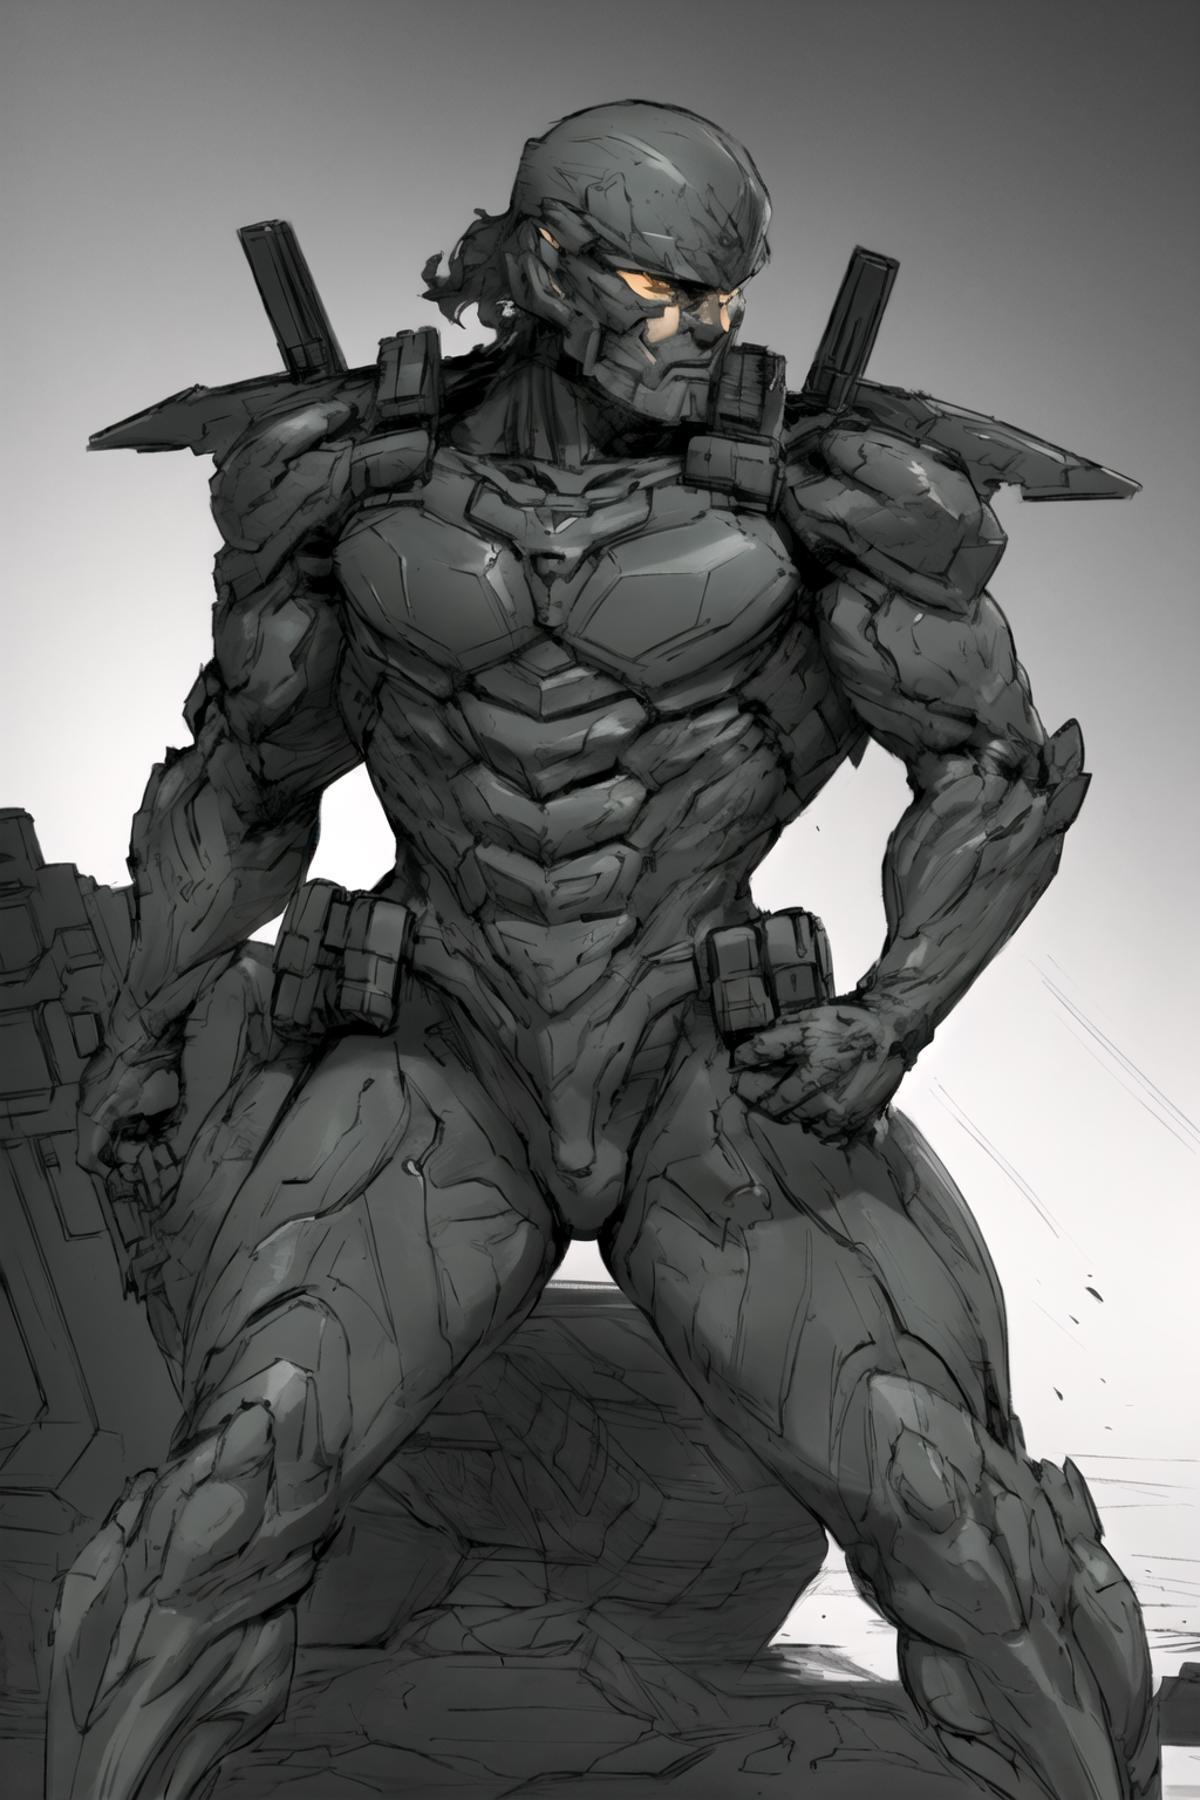 Yoji Shinkawa (Metal Gear Solid Concept Art) - Style image by KhajiitHasWares